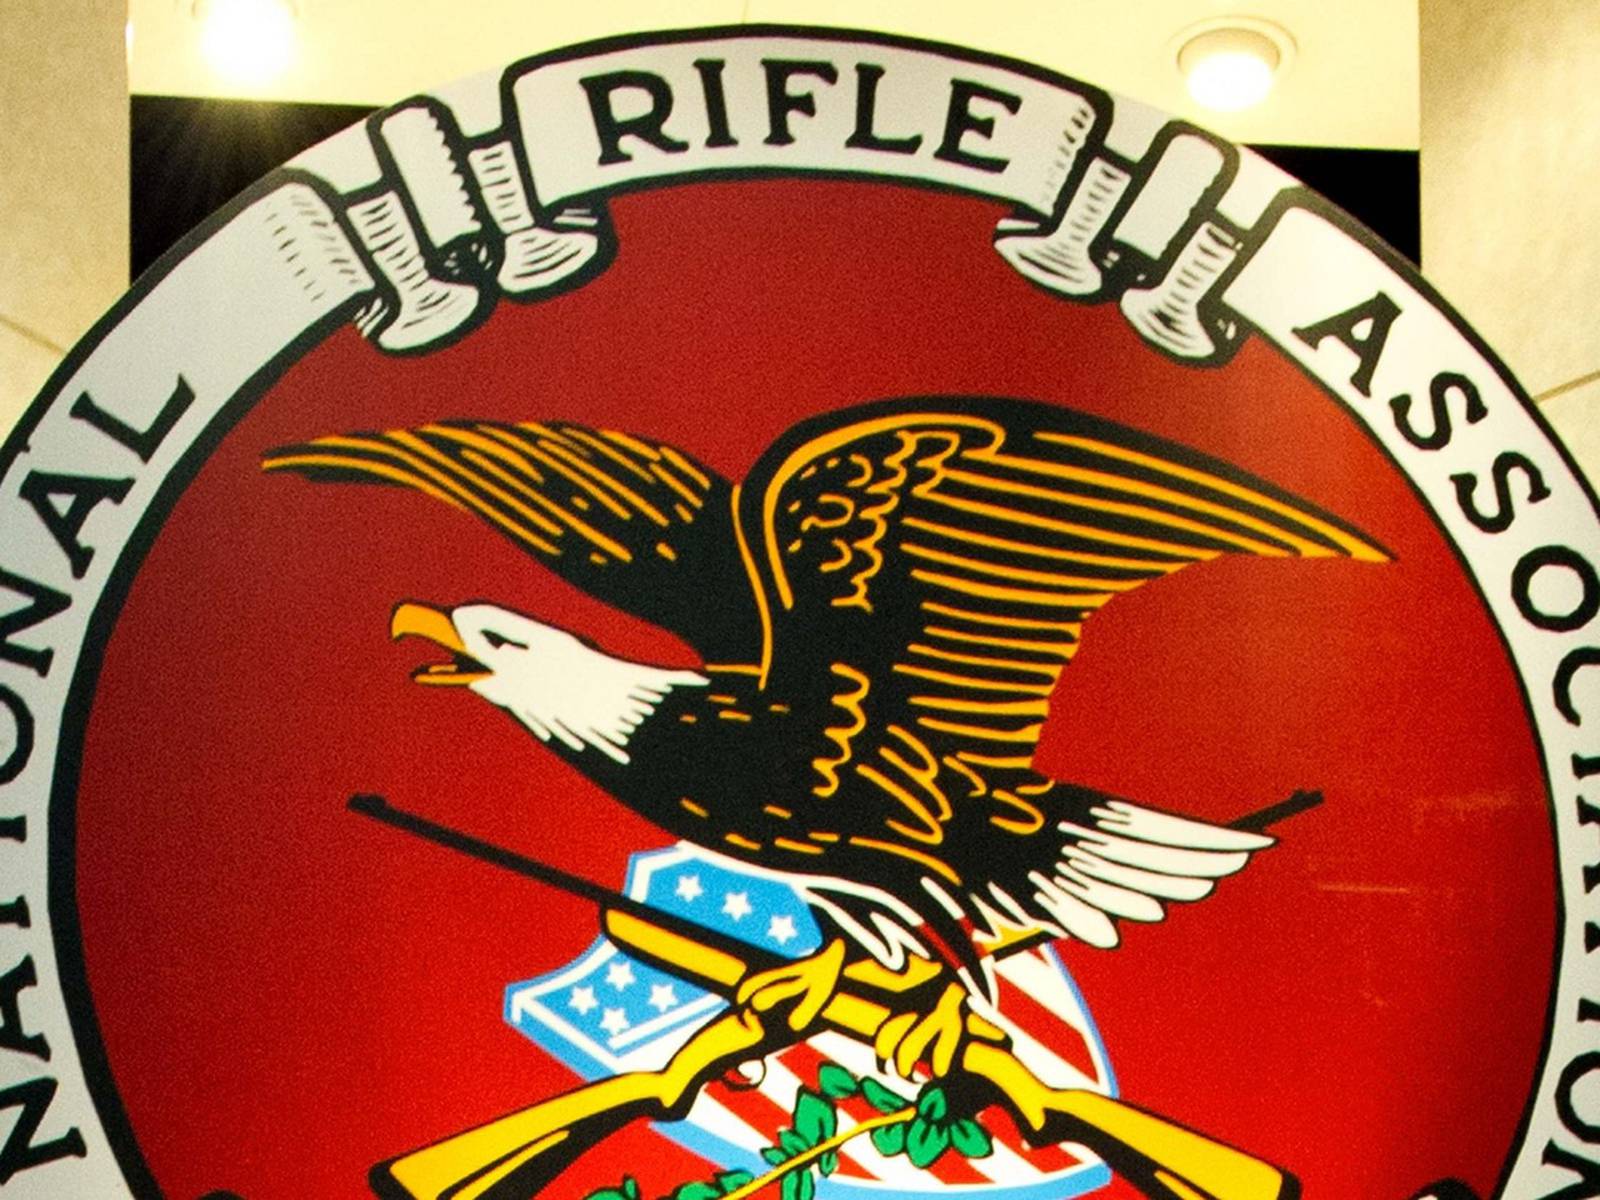 national rifle association logo wallpaper